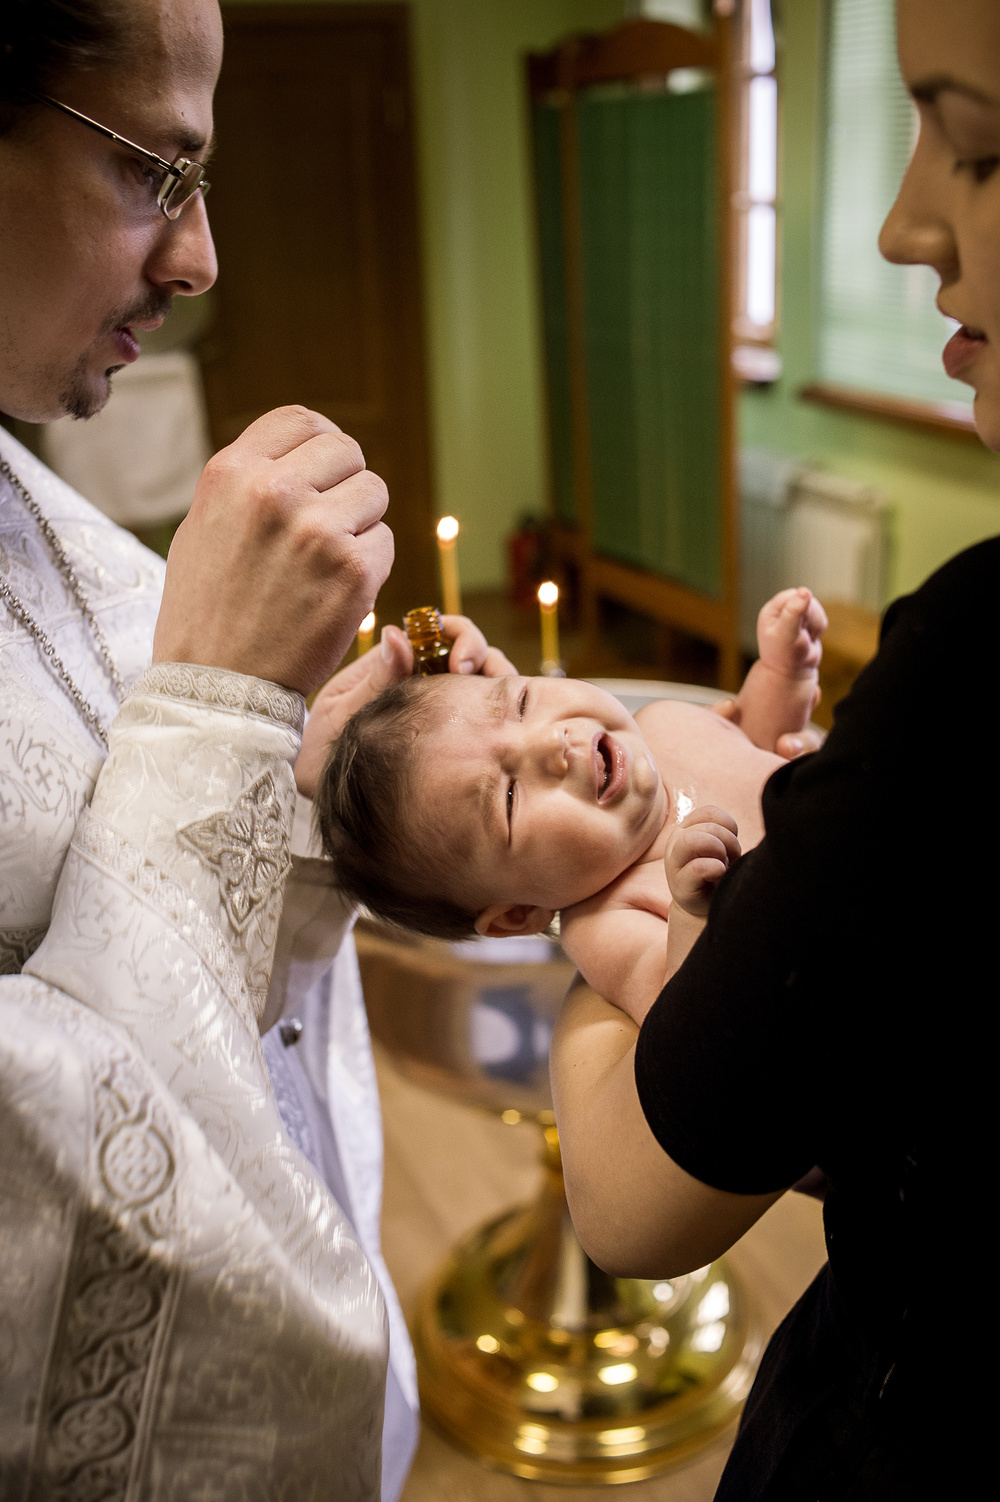 #infant baptism #крещение #фотосъемка крещения